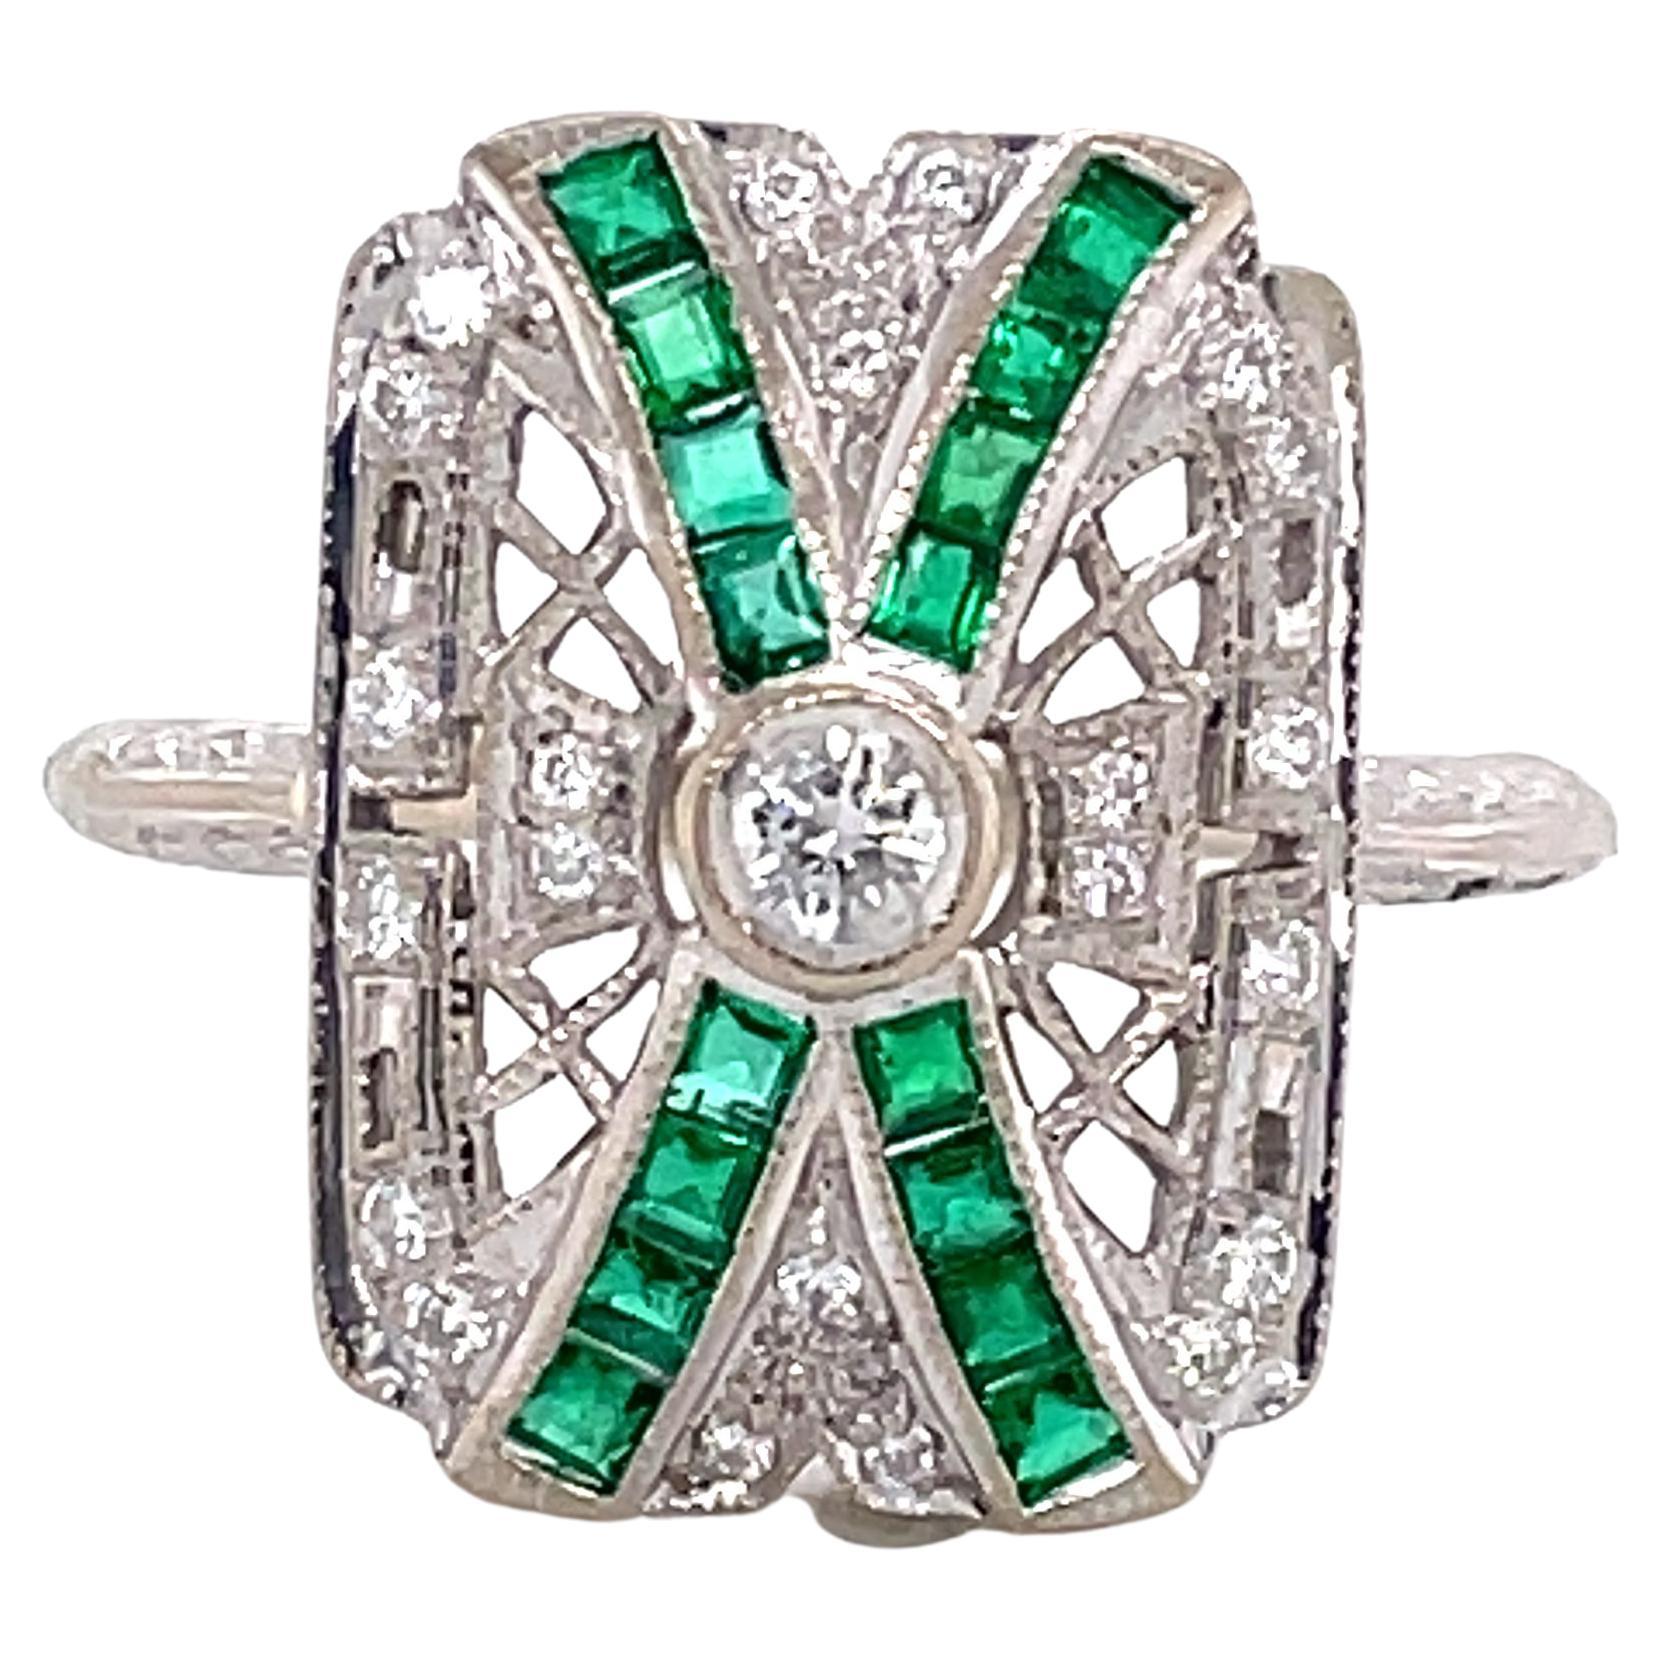 Art Deco Style Emerald Diamond 18K White Gold Ring